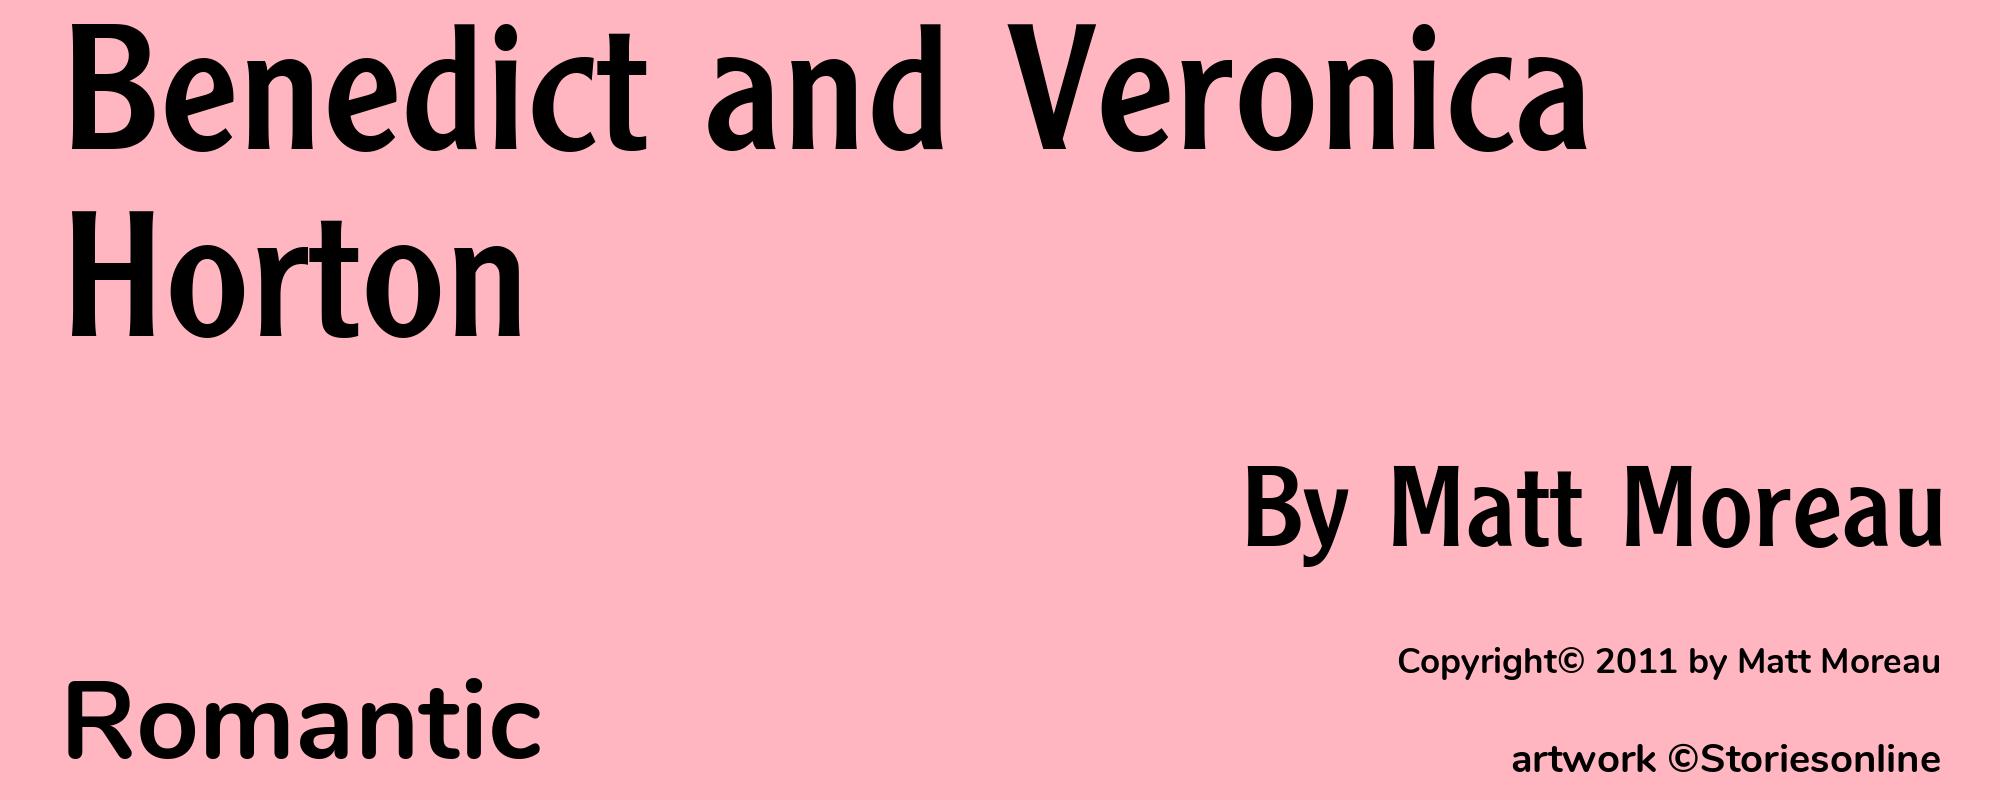 Benedict and Veronica Horton - Cover